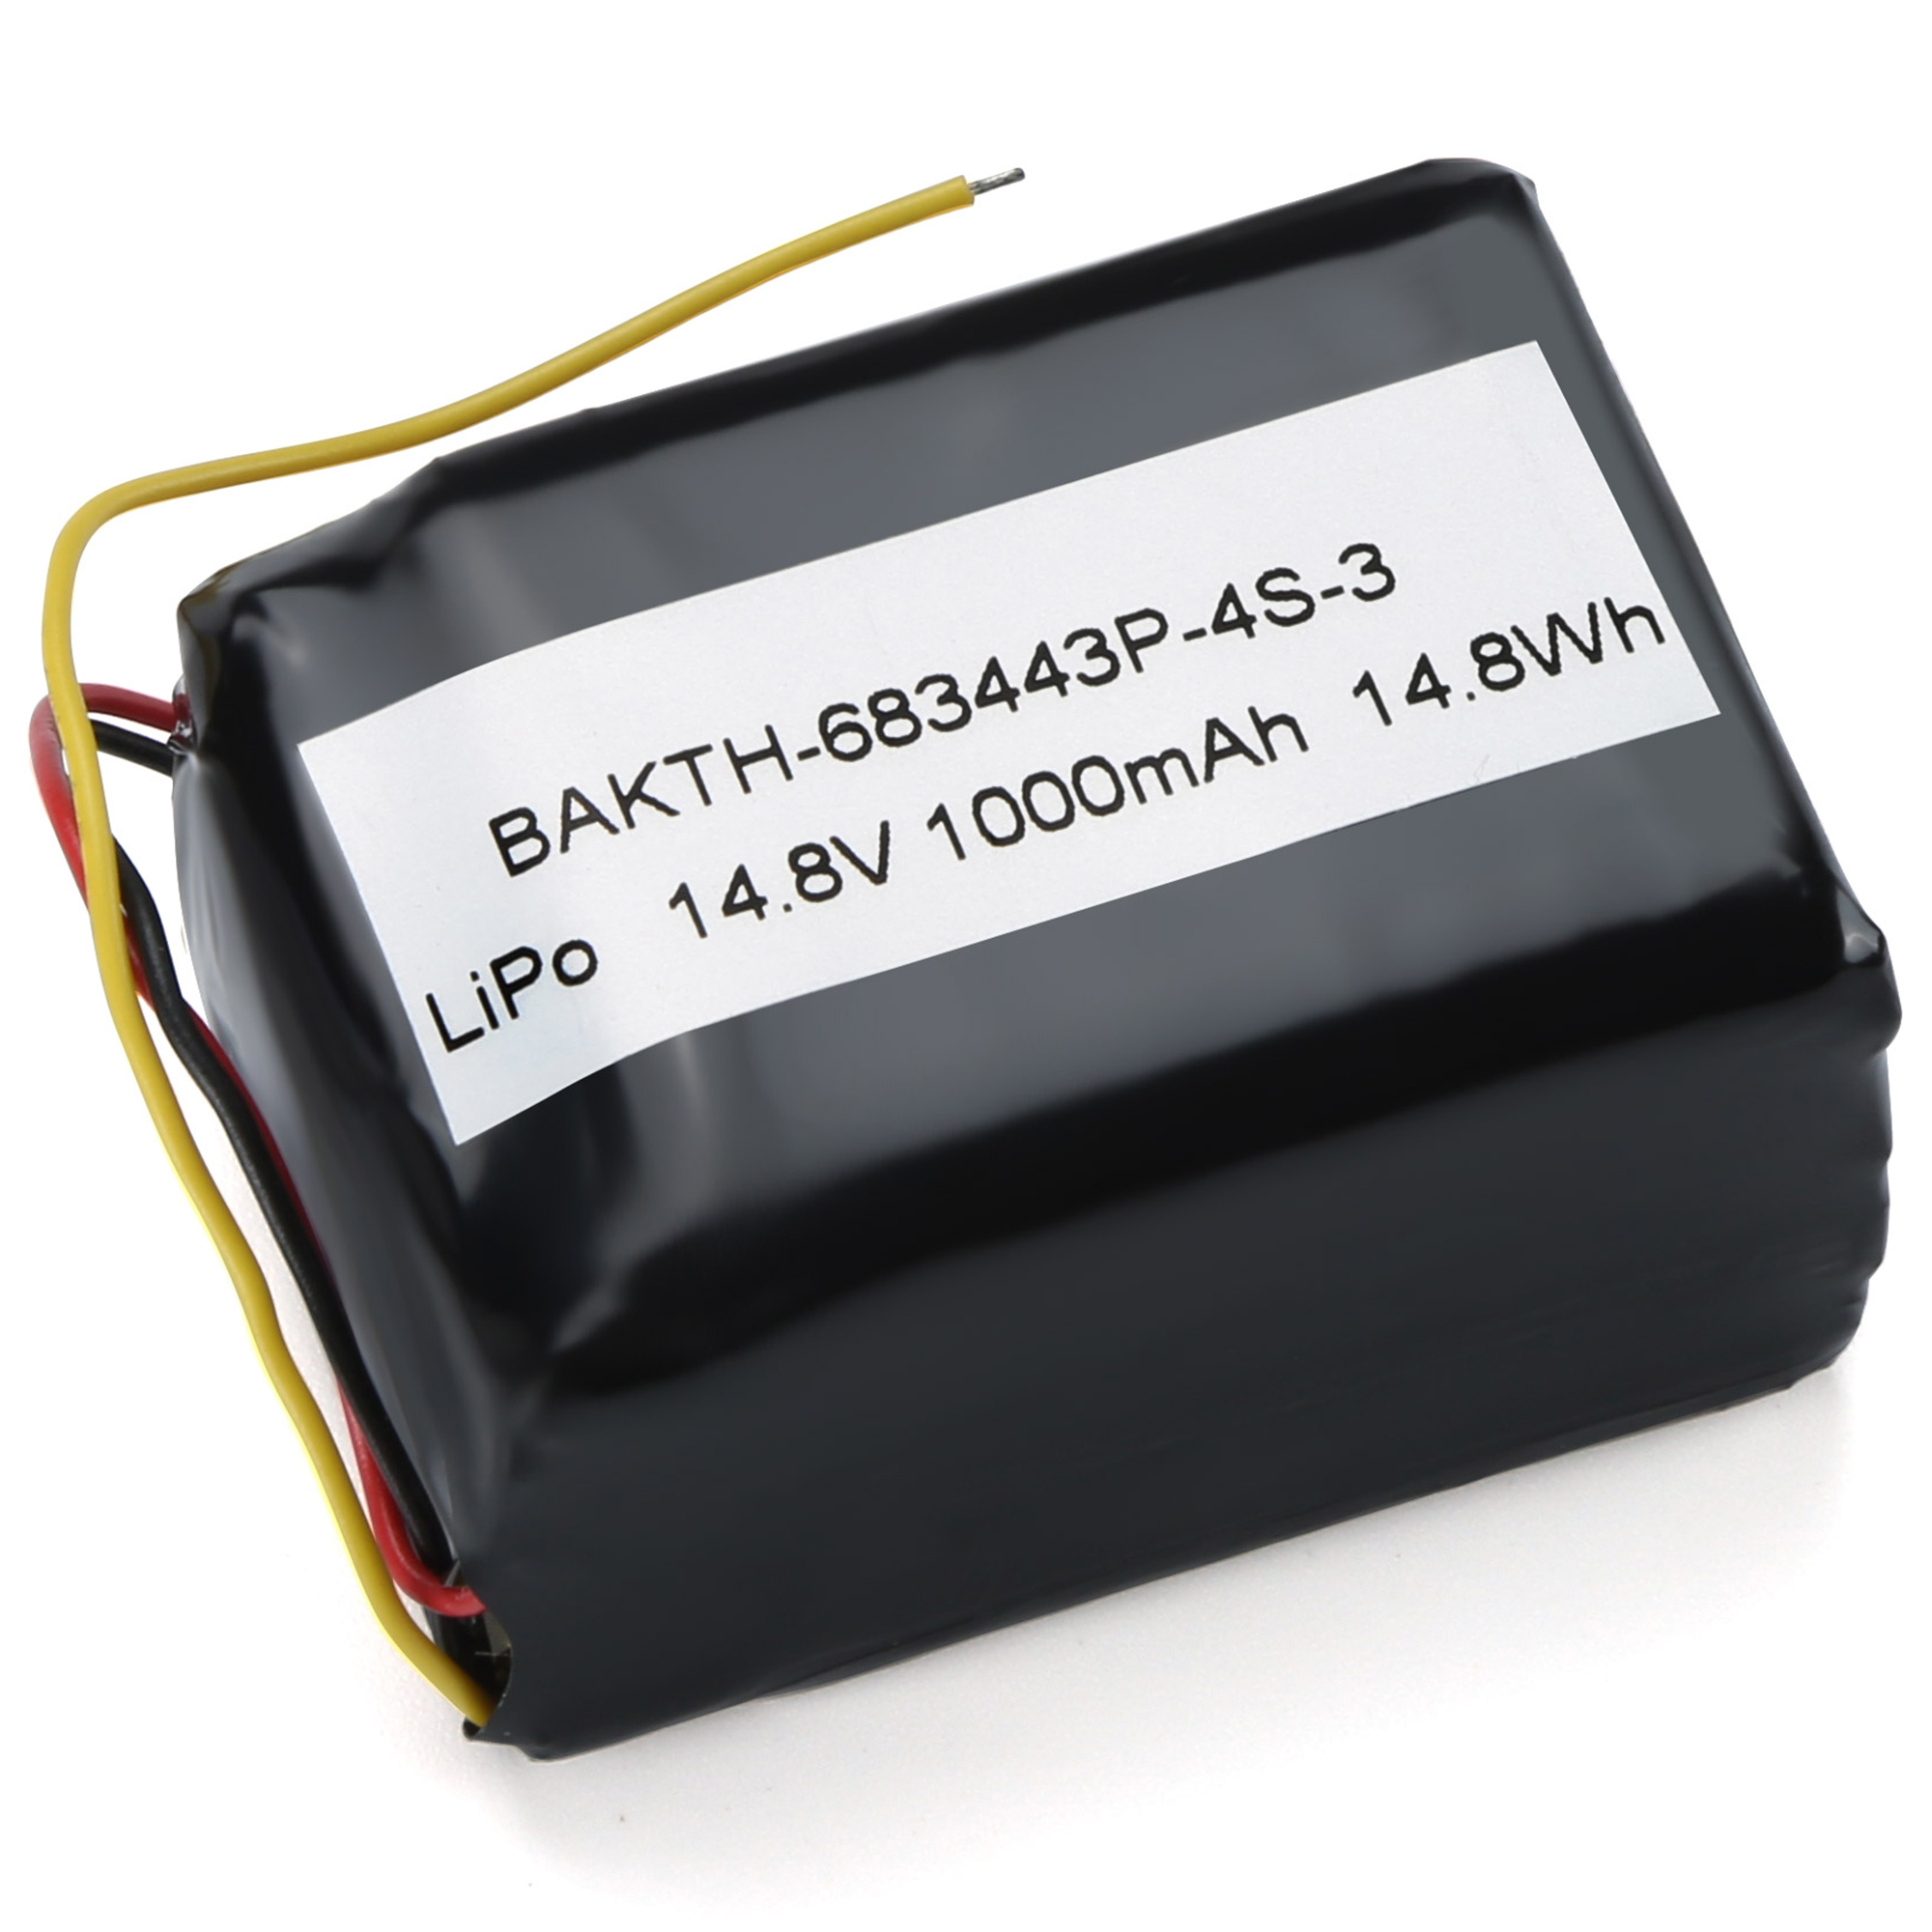 BAKTH-683443P-4S-3可充电长寿命锂聚合物电池14.8V 1000mAh 